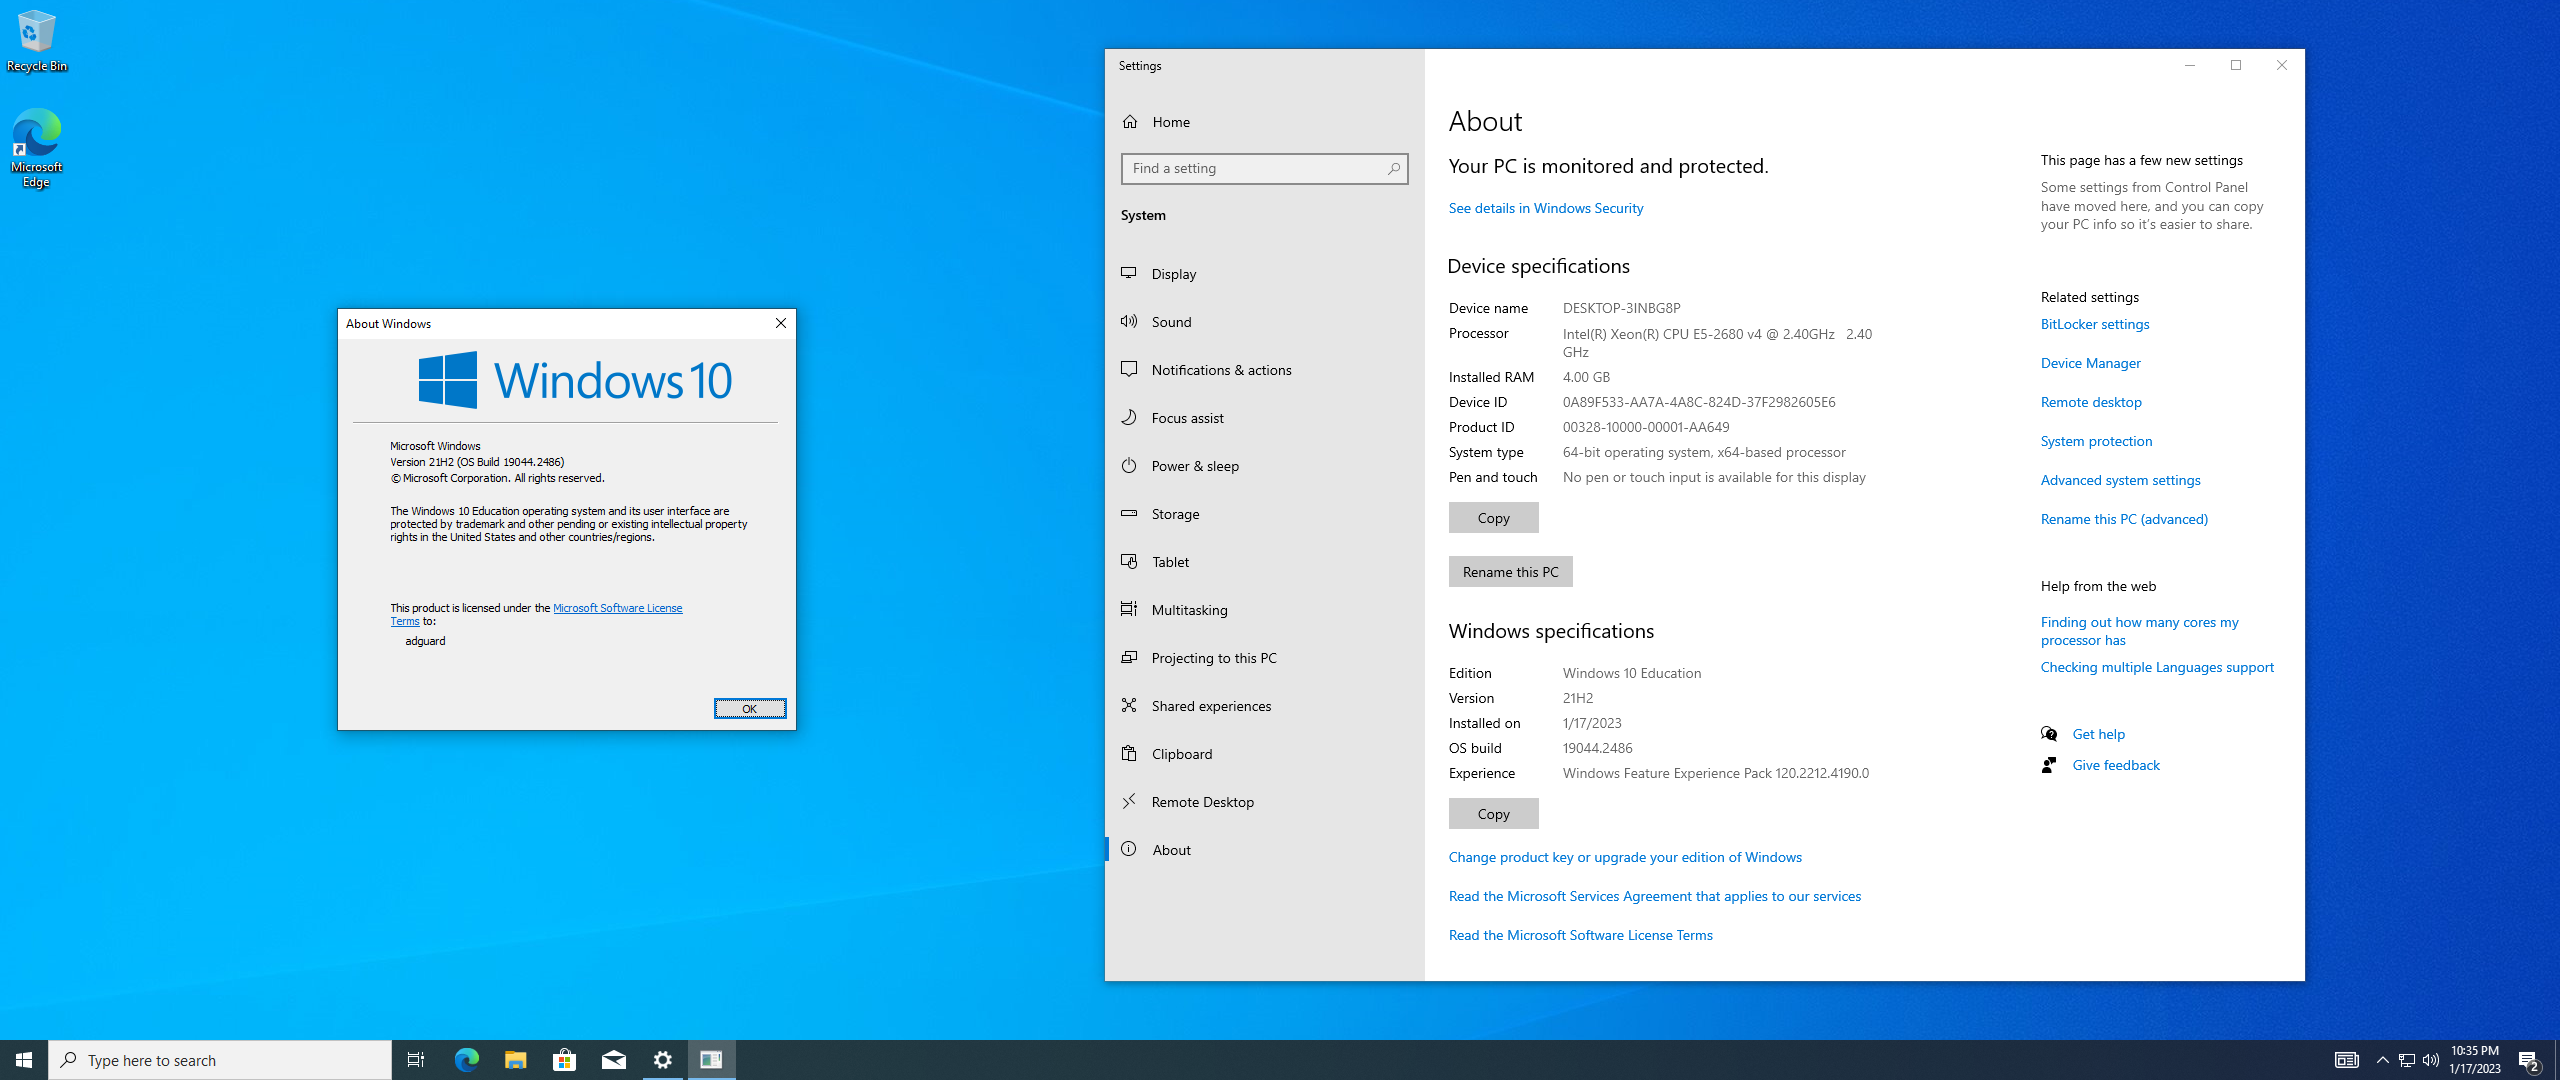 Microsoft Windows 10.0.19044.2486, Version 21H2 (Updated January 2023) - Оригинальные образы от Microsoft MSDN [En]